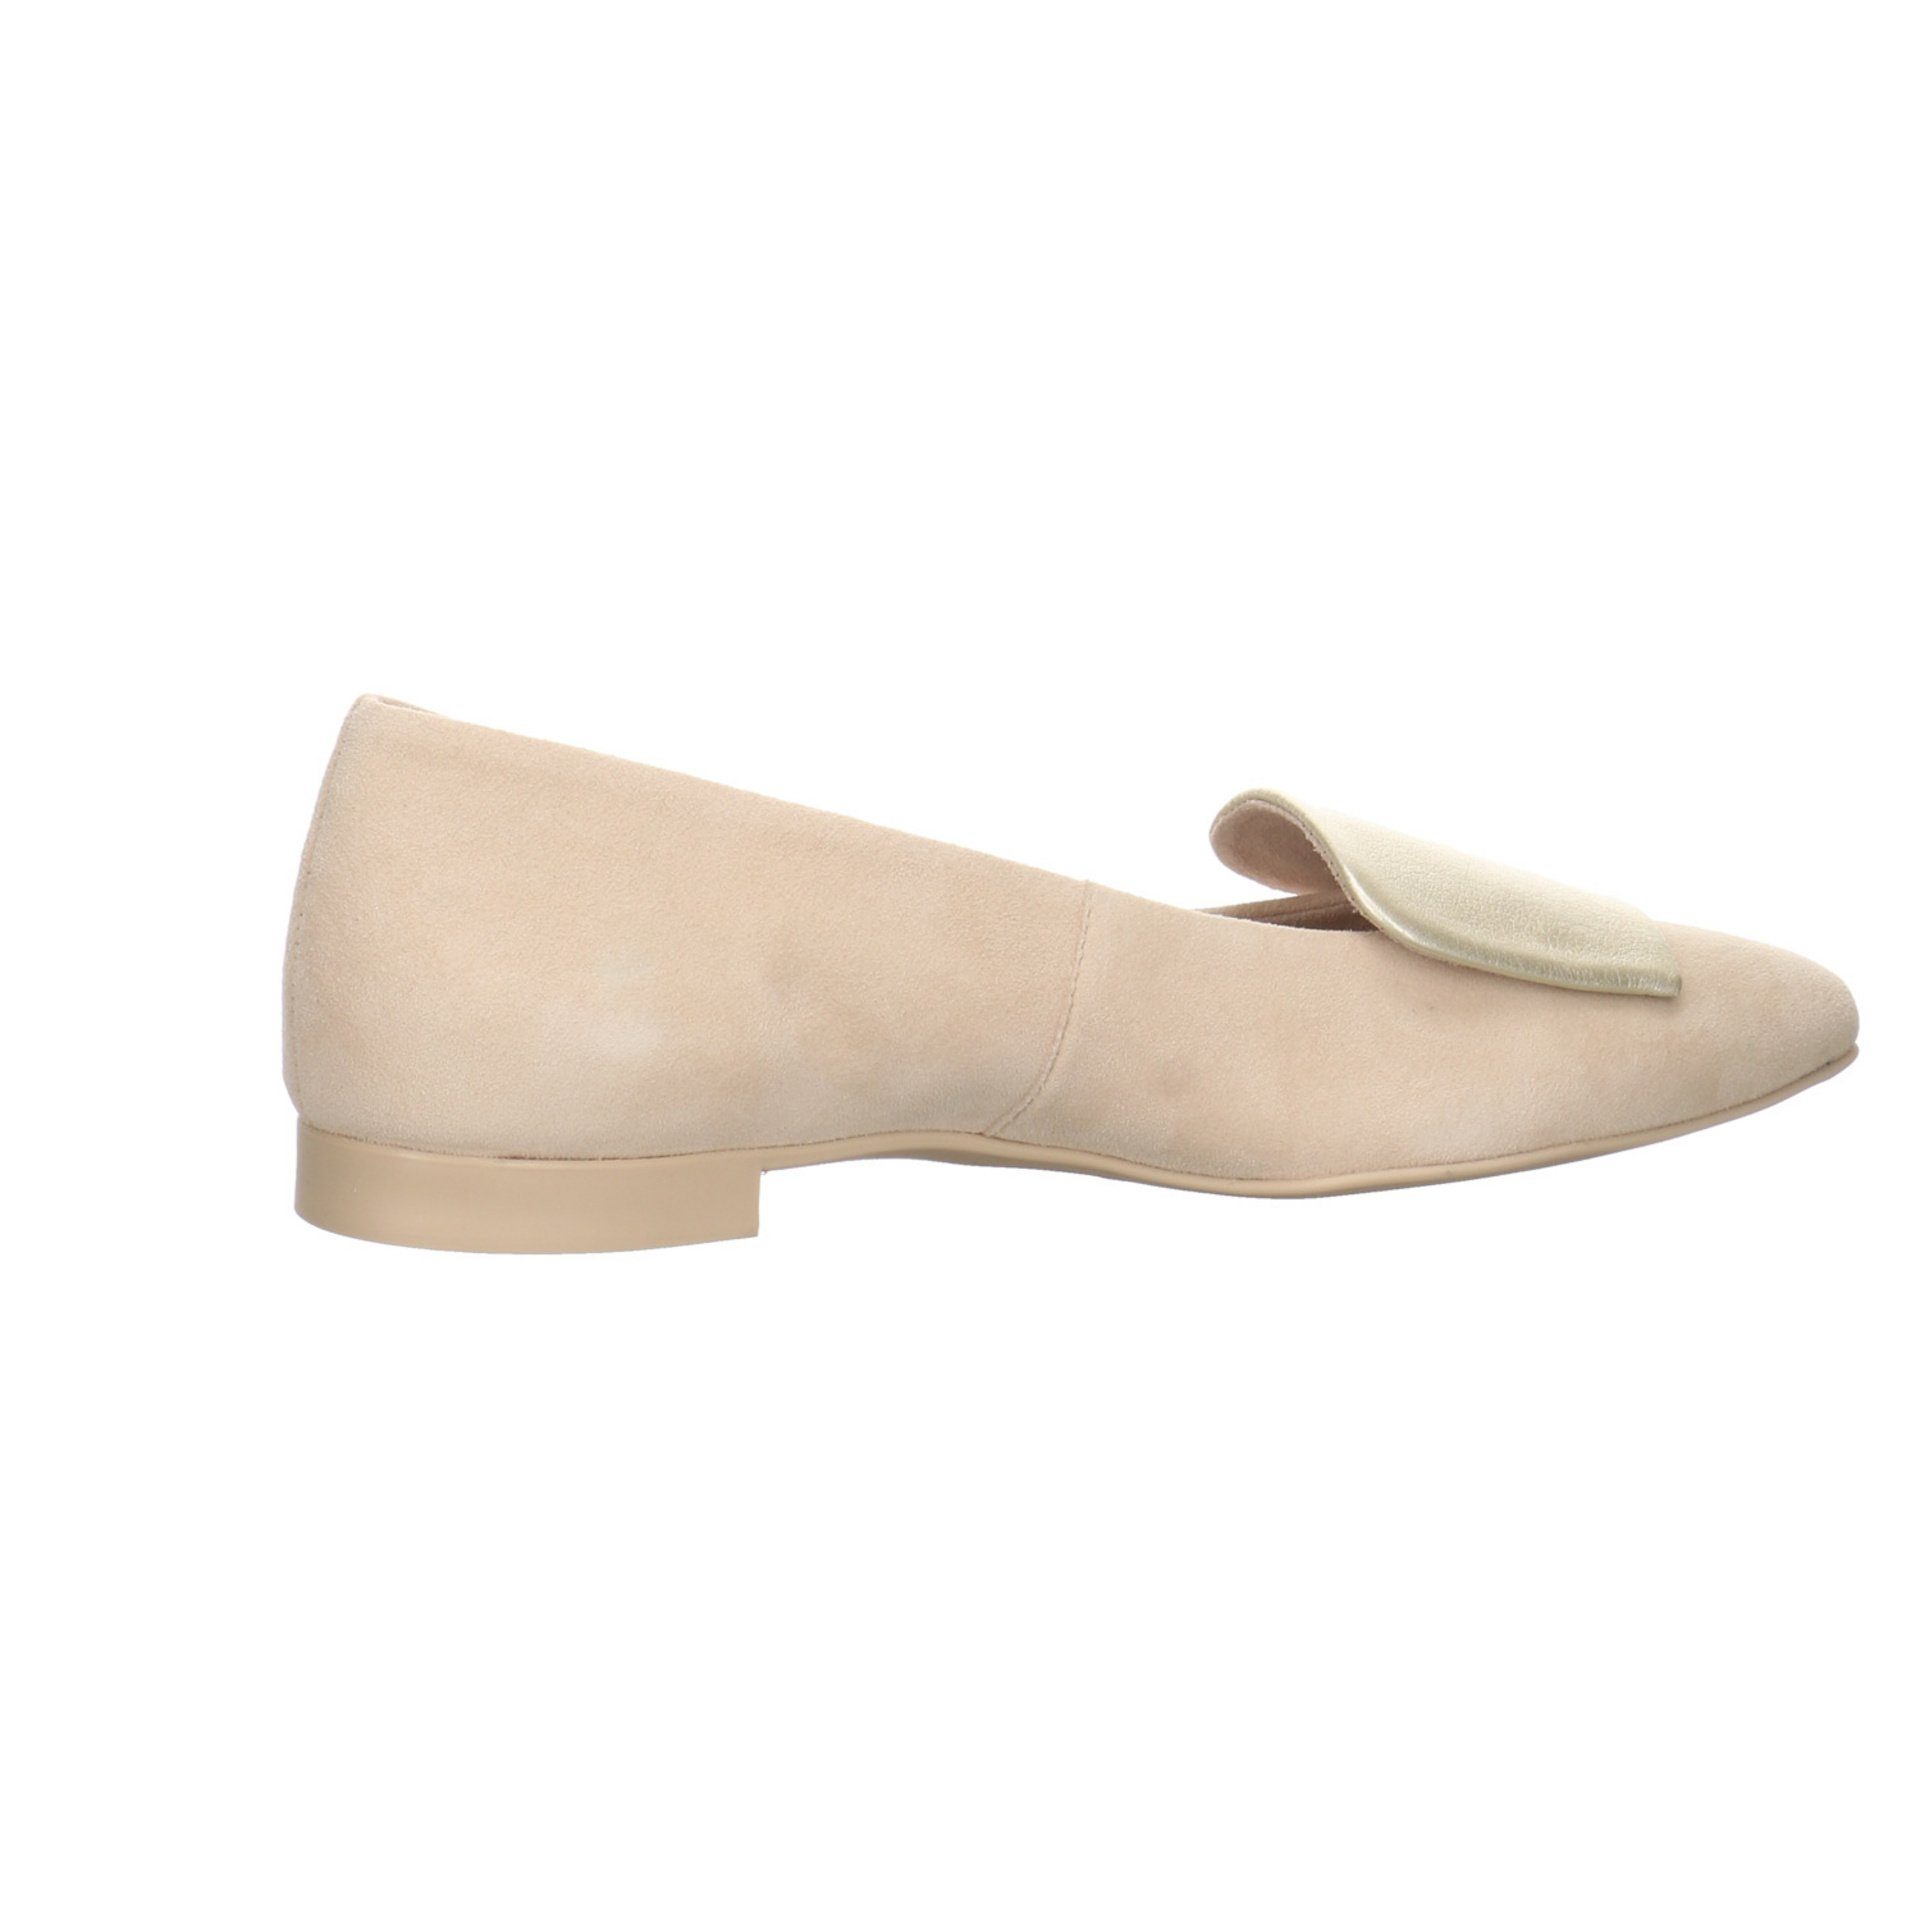 Paul Green Ballerinas Schuhe Flats Bequem Veloursleder Ballerina biscuit/palegold Ballerina